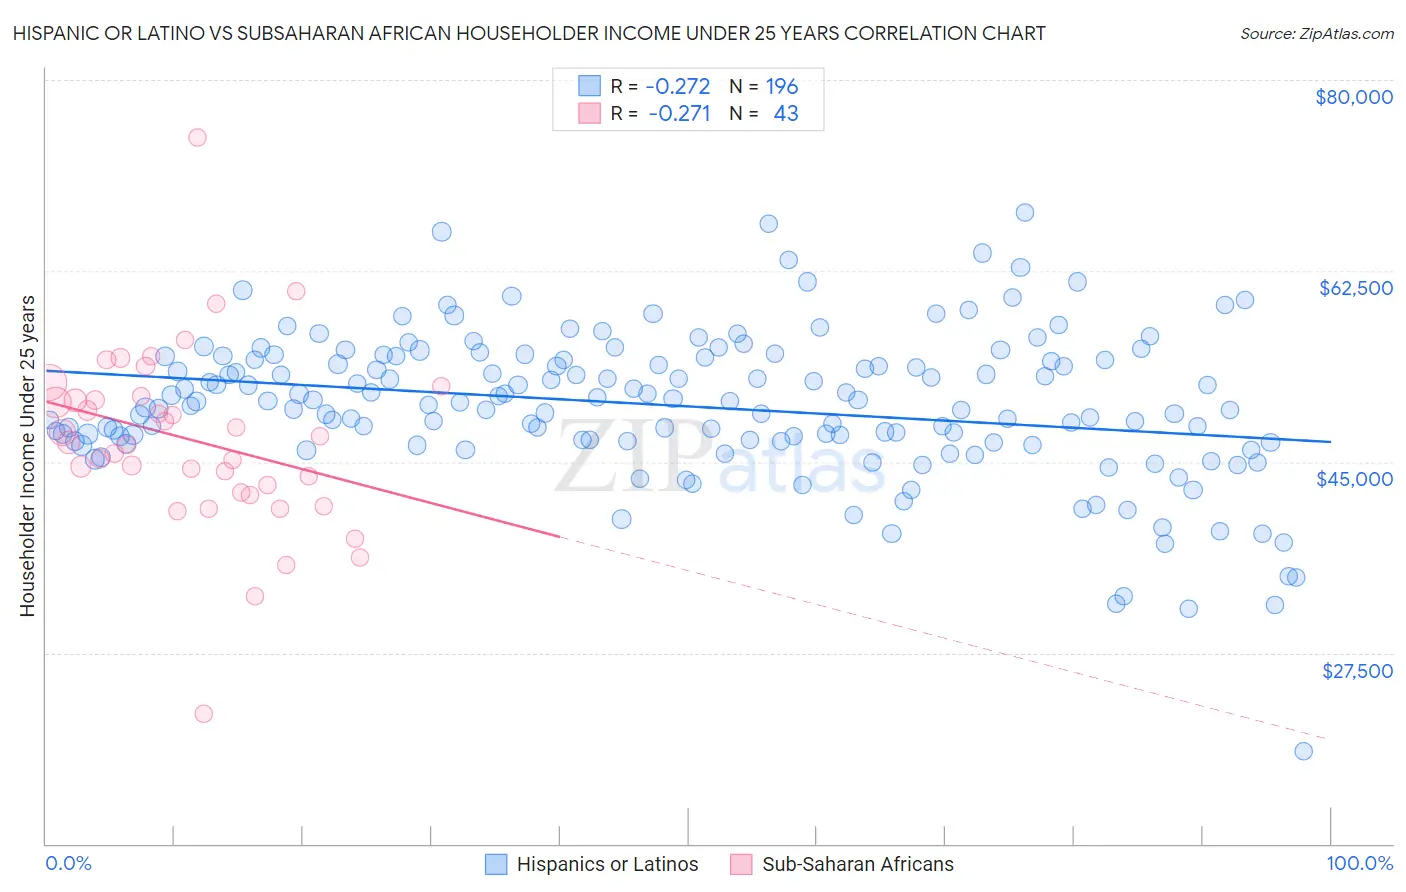 Hispanic or Latino vs Subsaharan African Householder Income Under 25 years